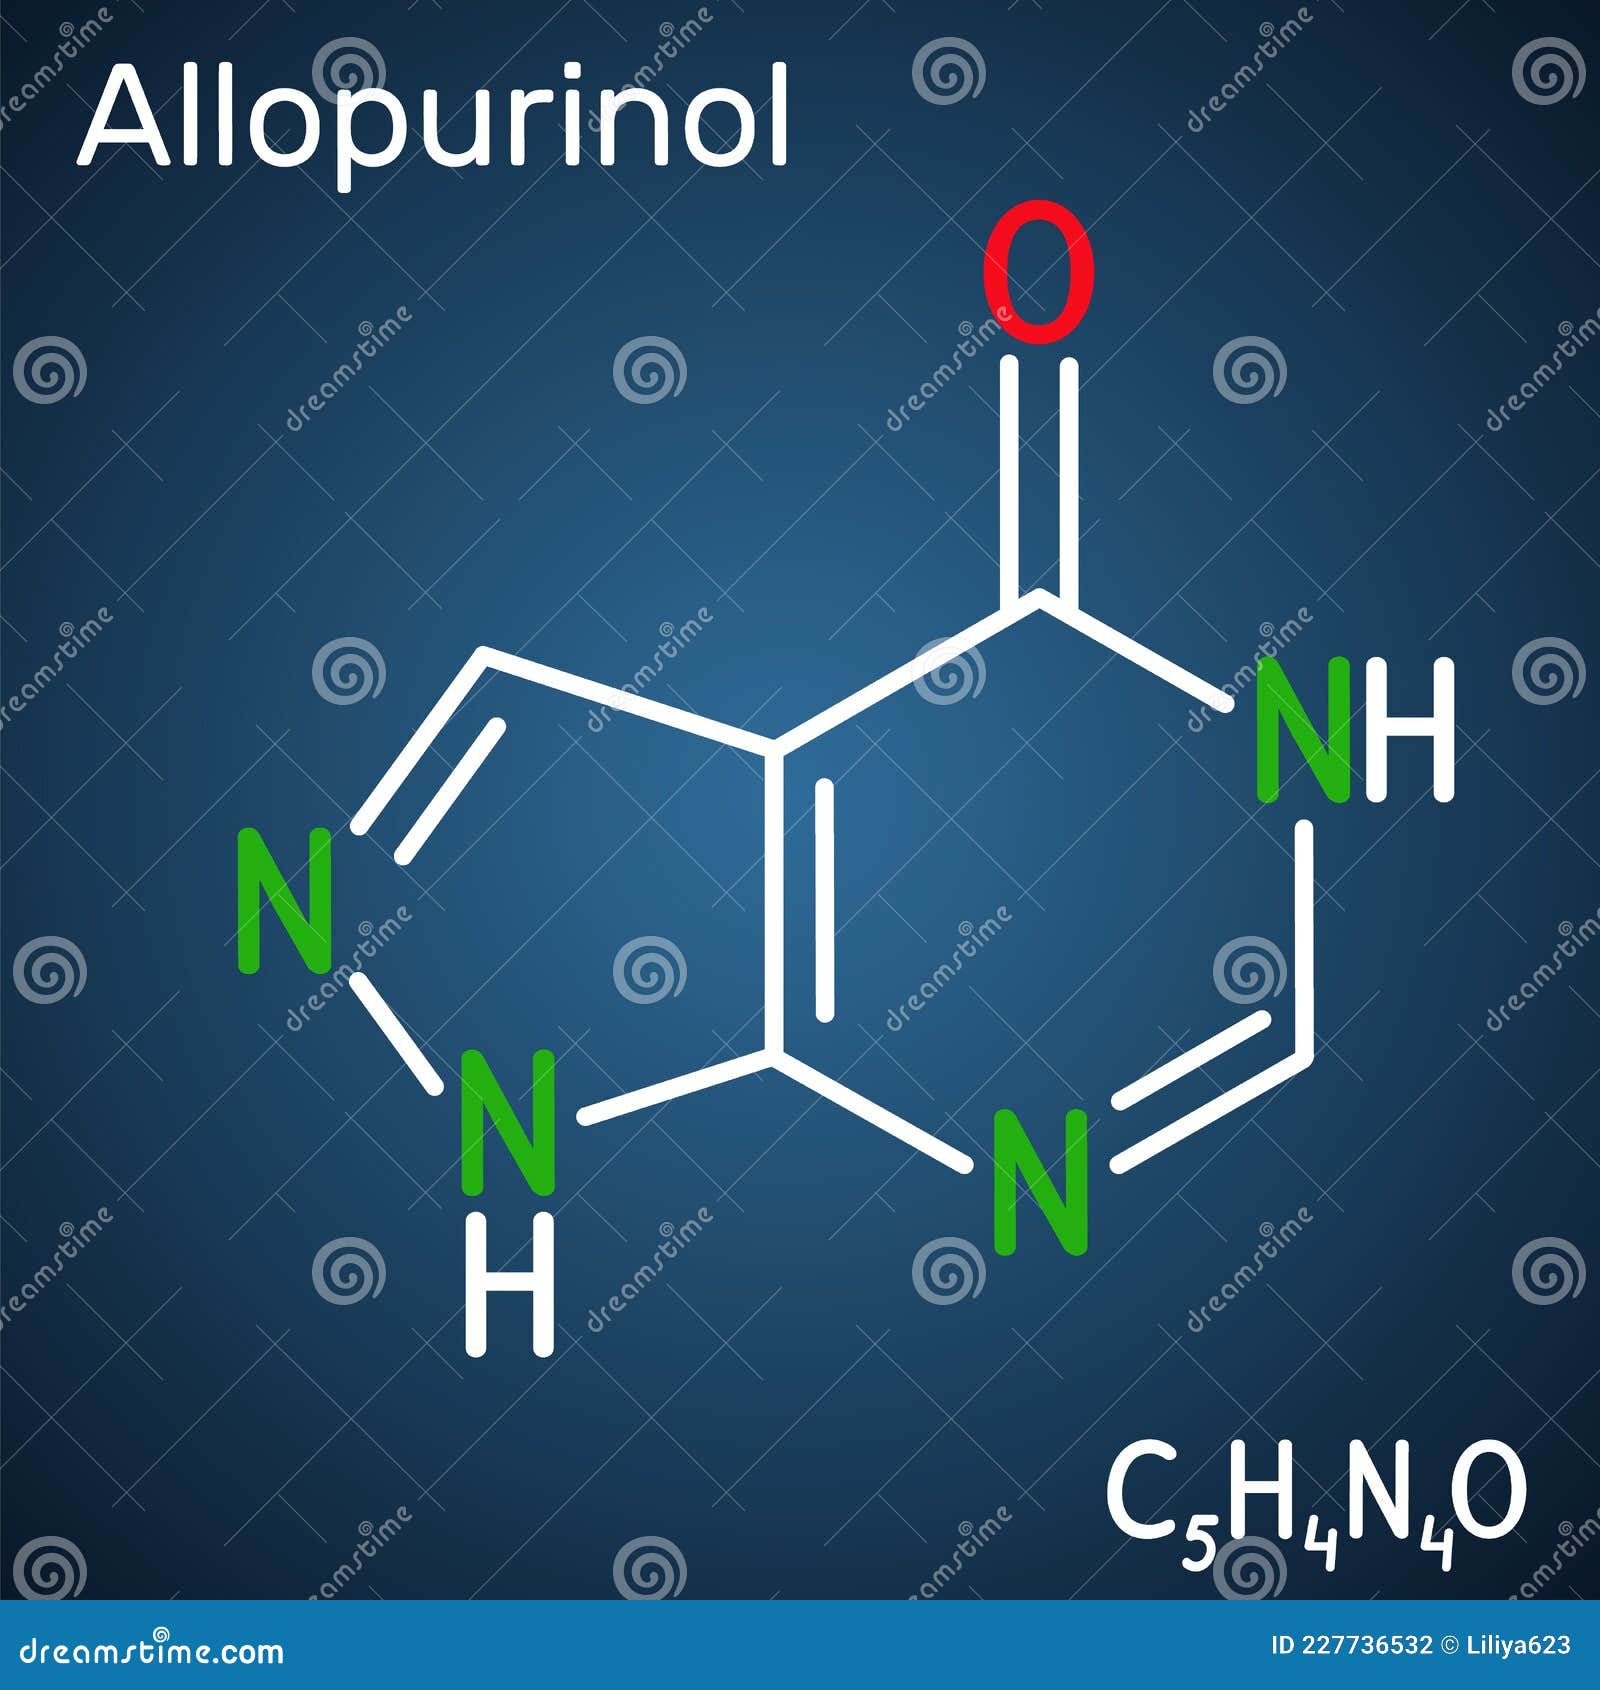 allopurinol molecule. drug is xanthine oxidase inhibitor, used to decrease high blood uric acid levels. structural